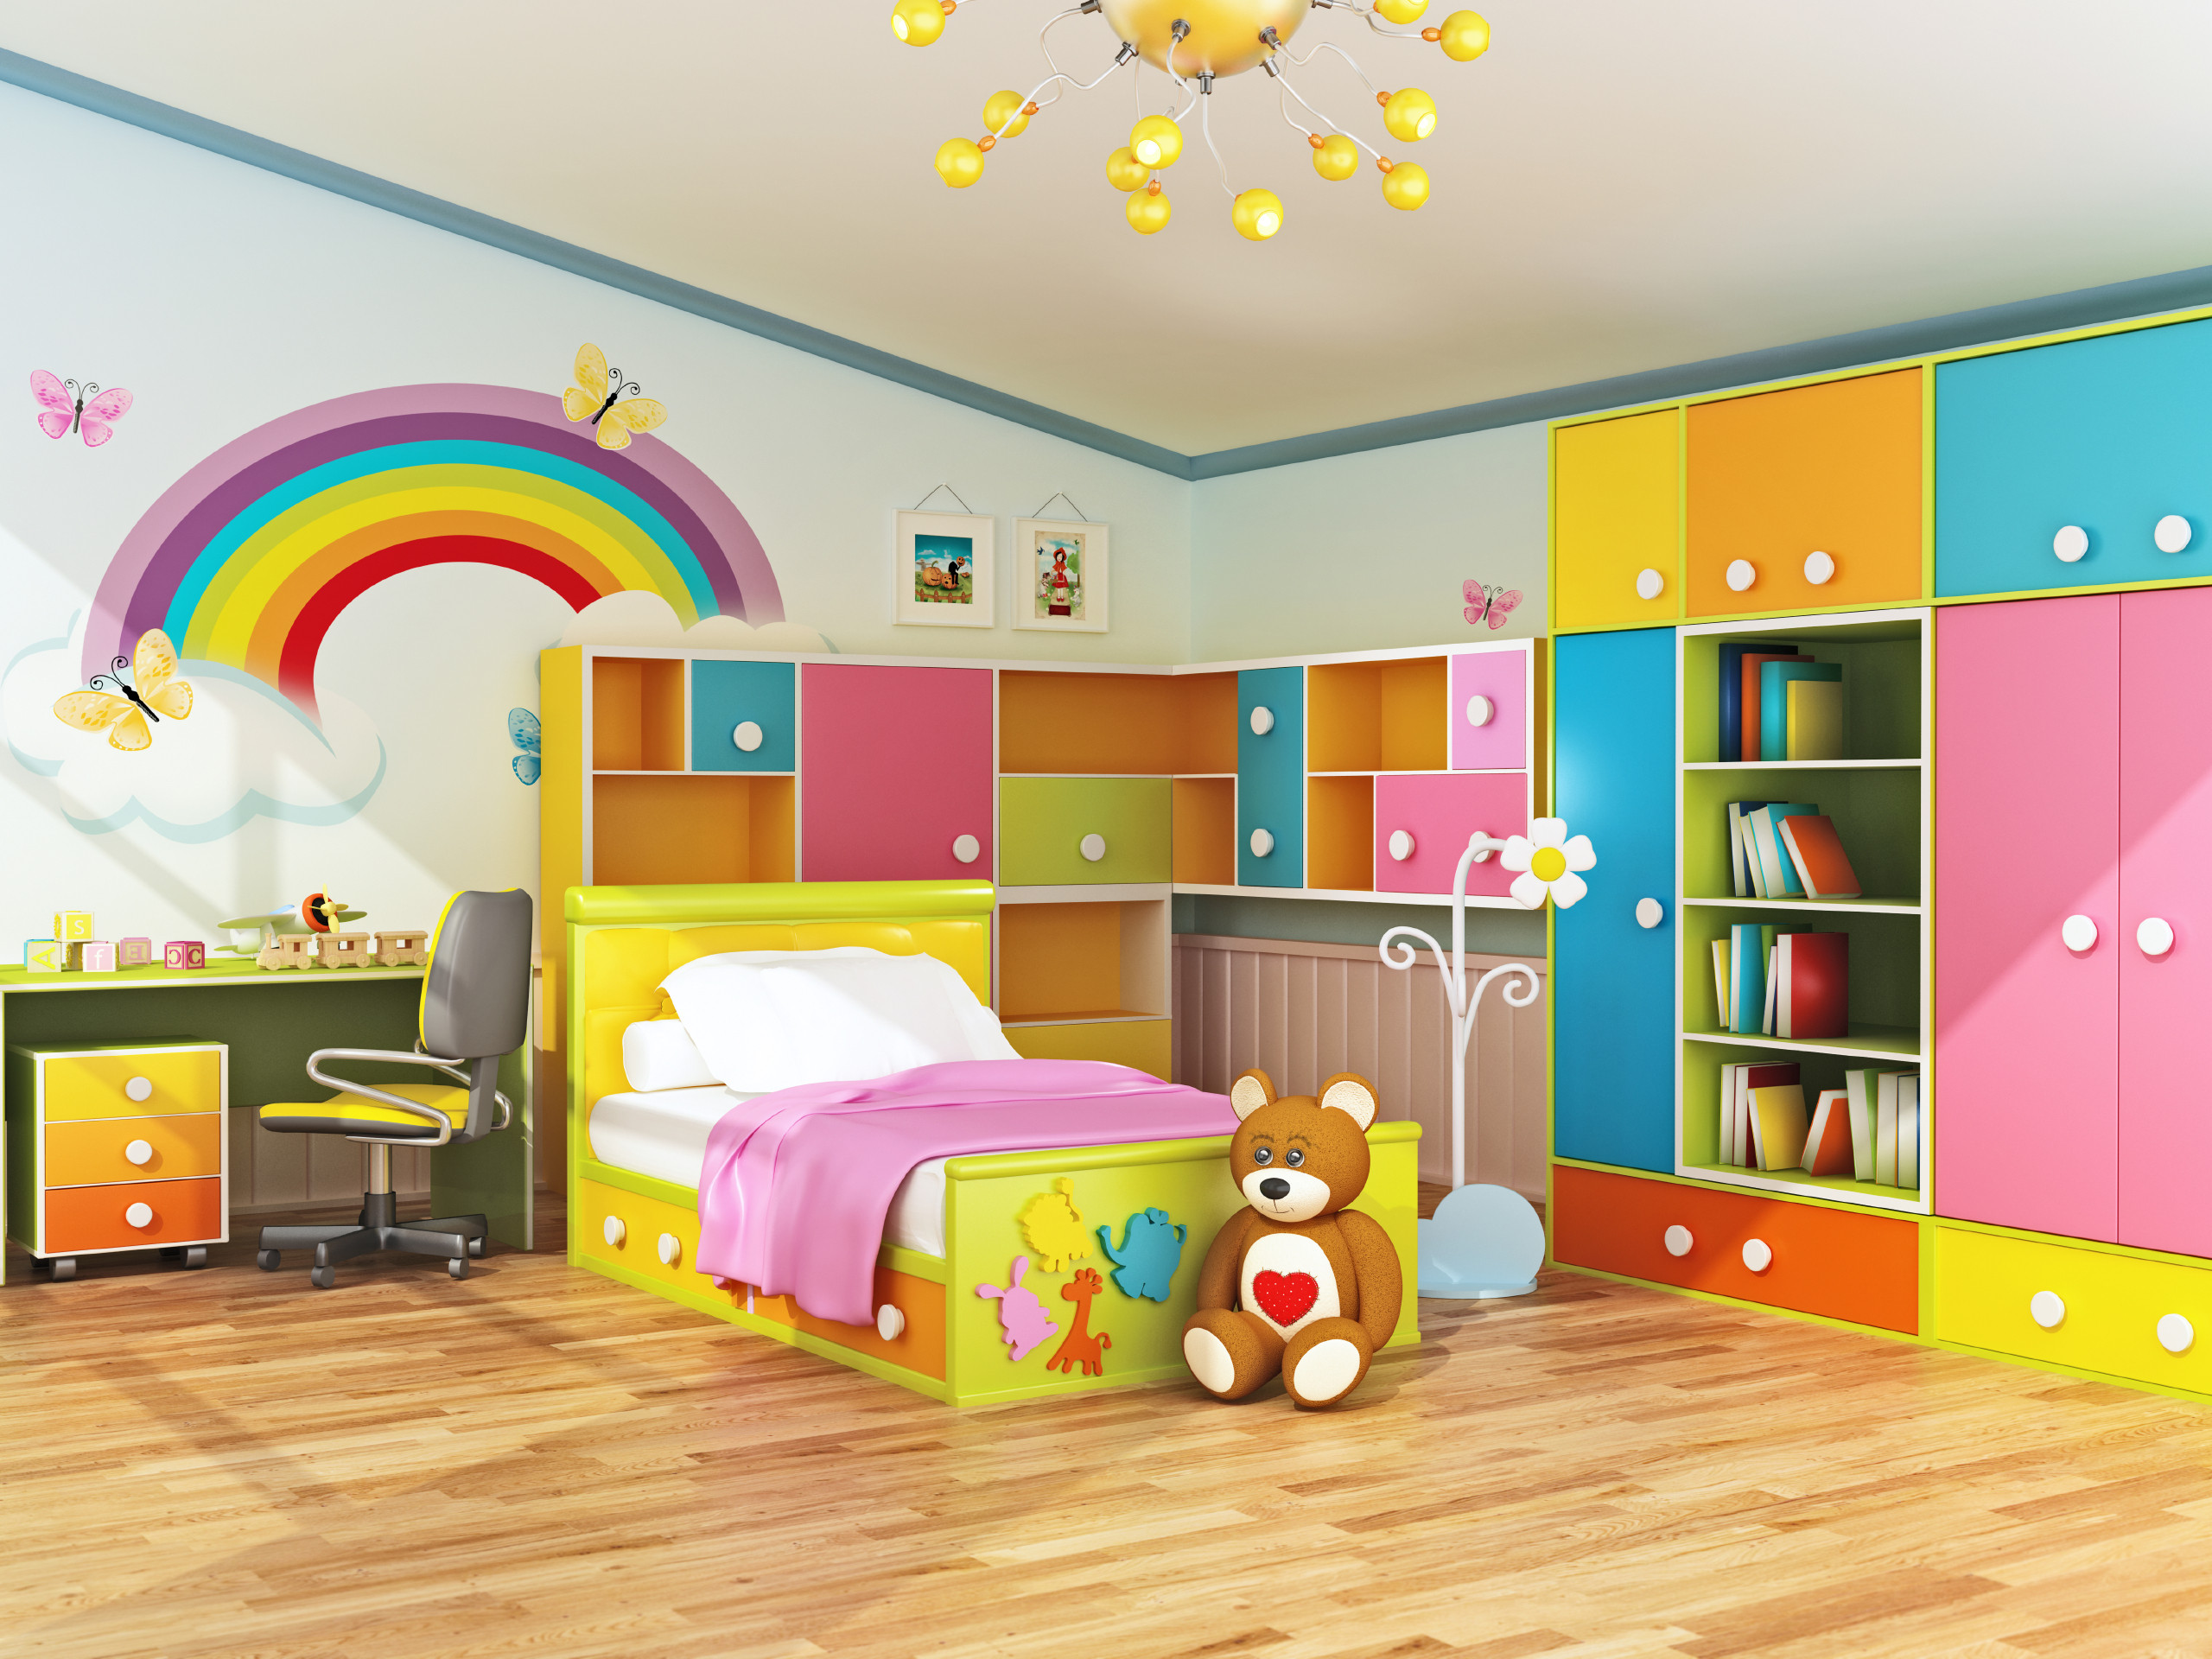 Room Decoration Kids
 Plan Ahead When Decorating Kids Bedrooms